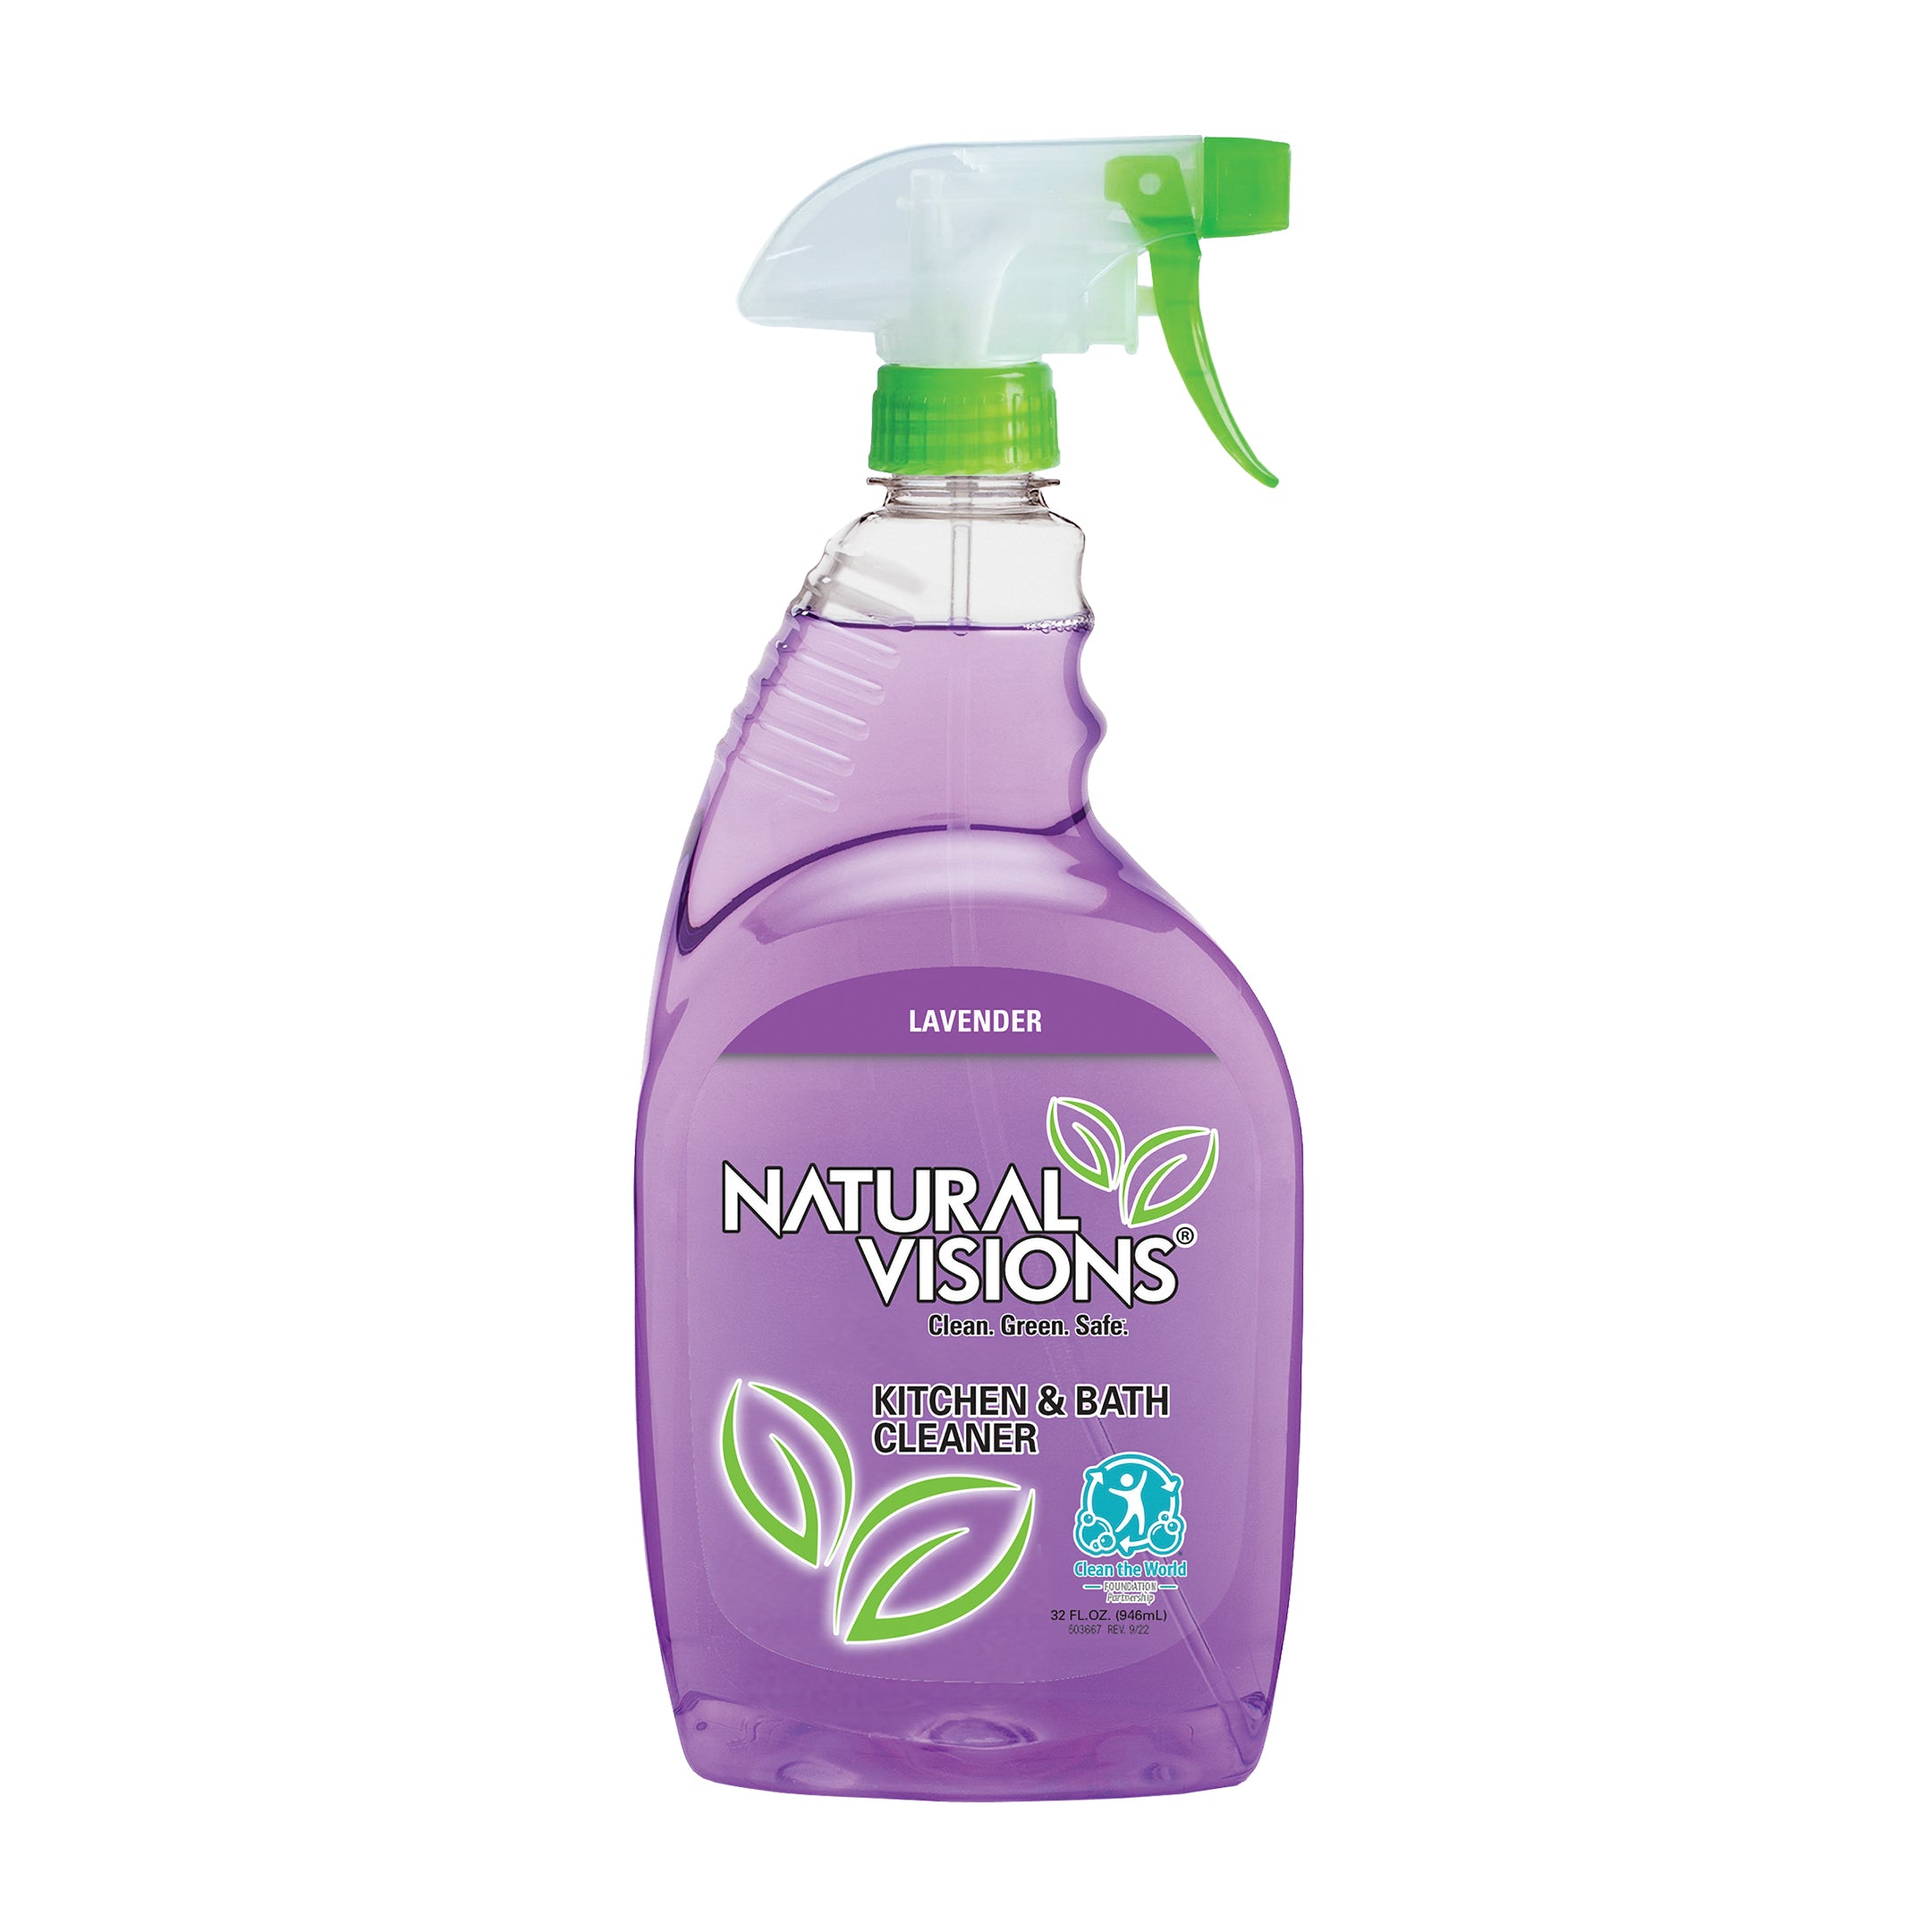 Natural Visions Lavender Kitchen & Bath Cleaner - 32oz/6pk